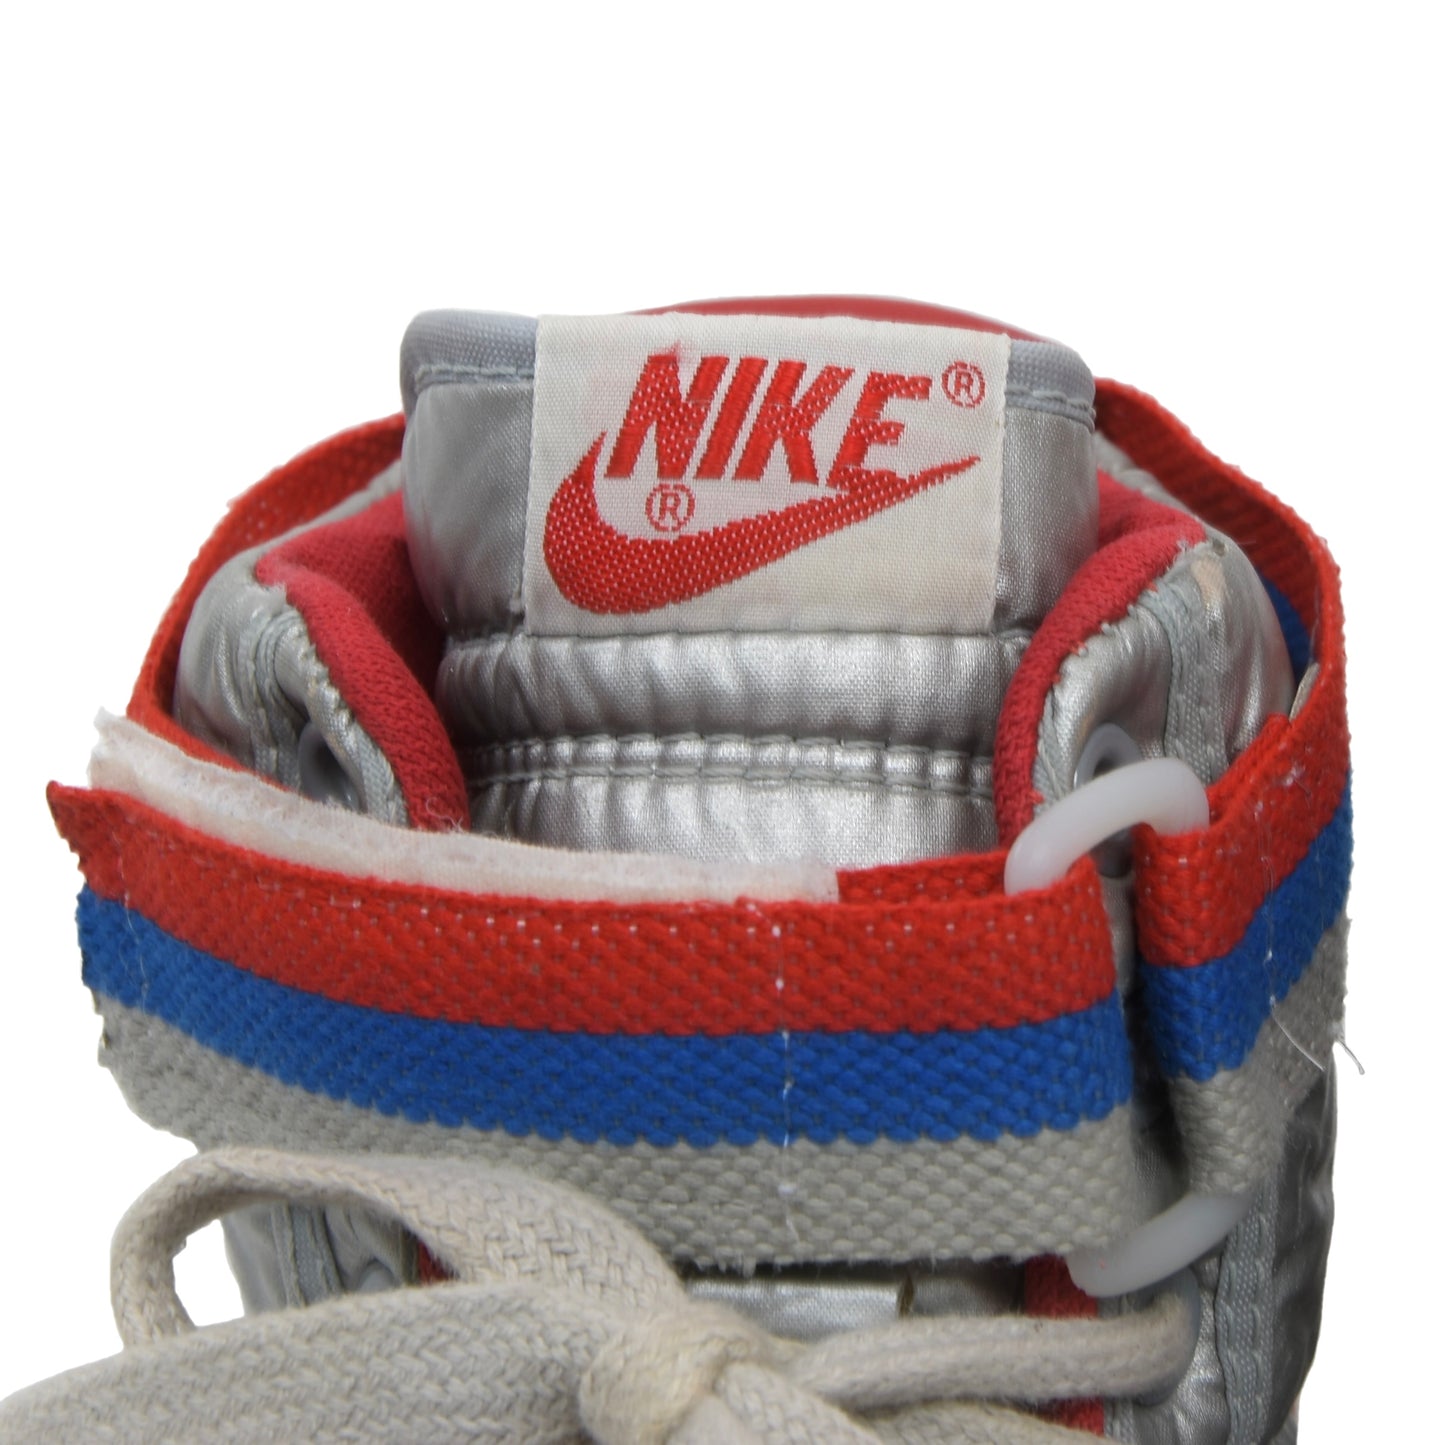 Vintage 1984 Nike Vandal Supreme Sneakers Size 8 1/2 - Silver